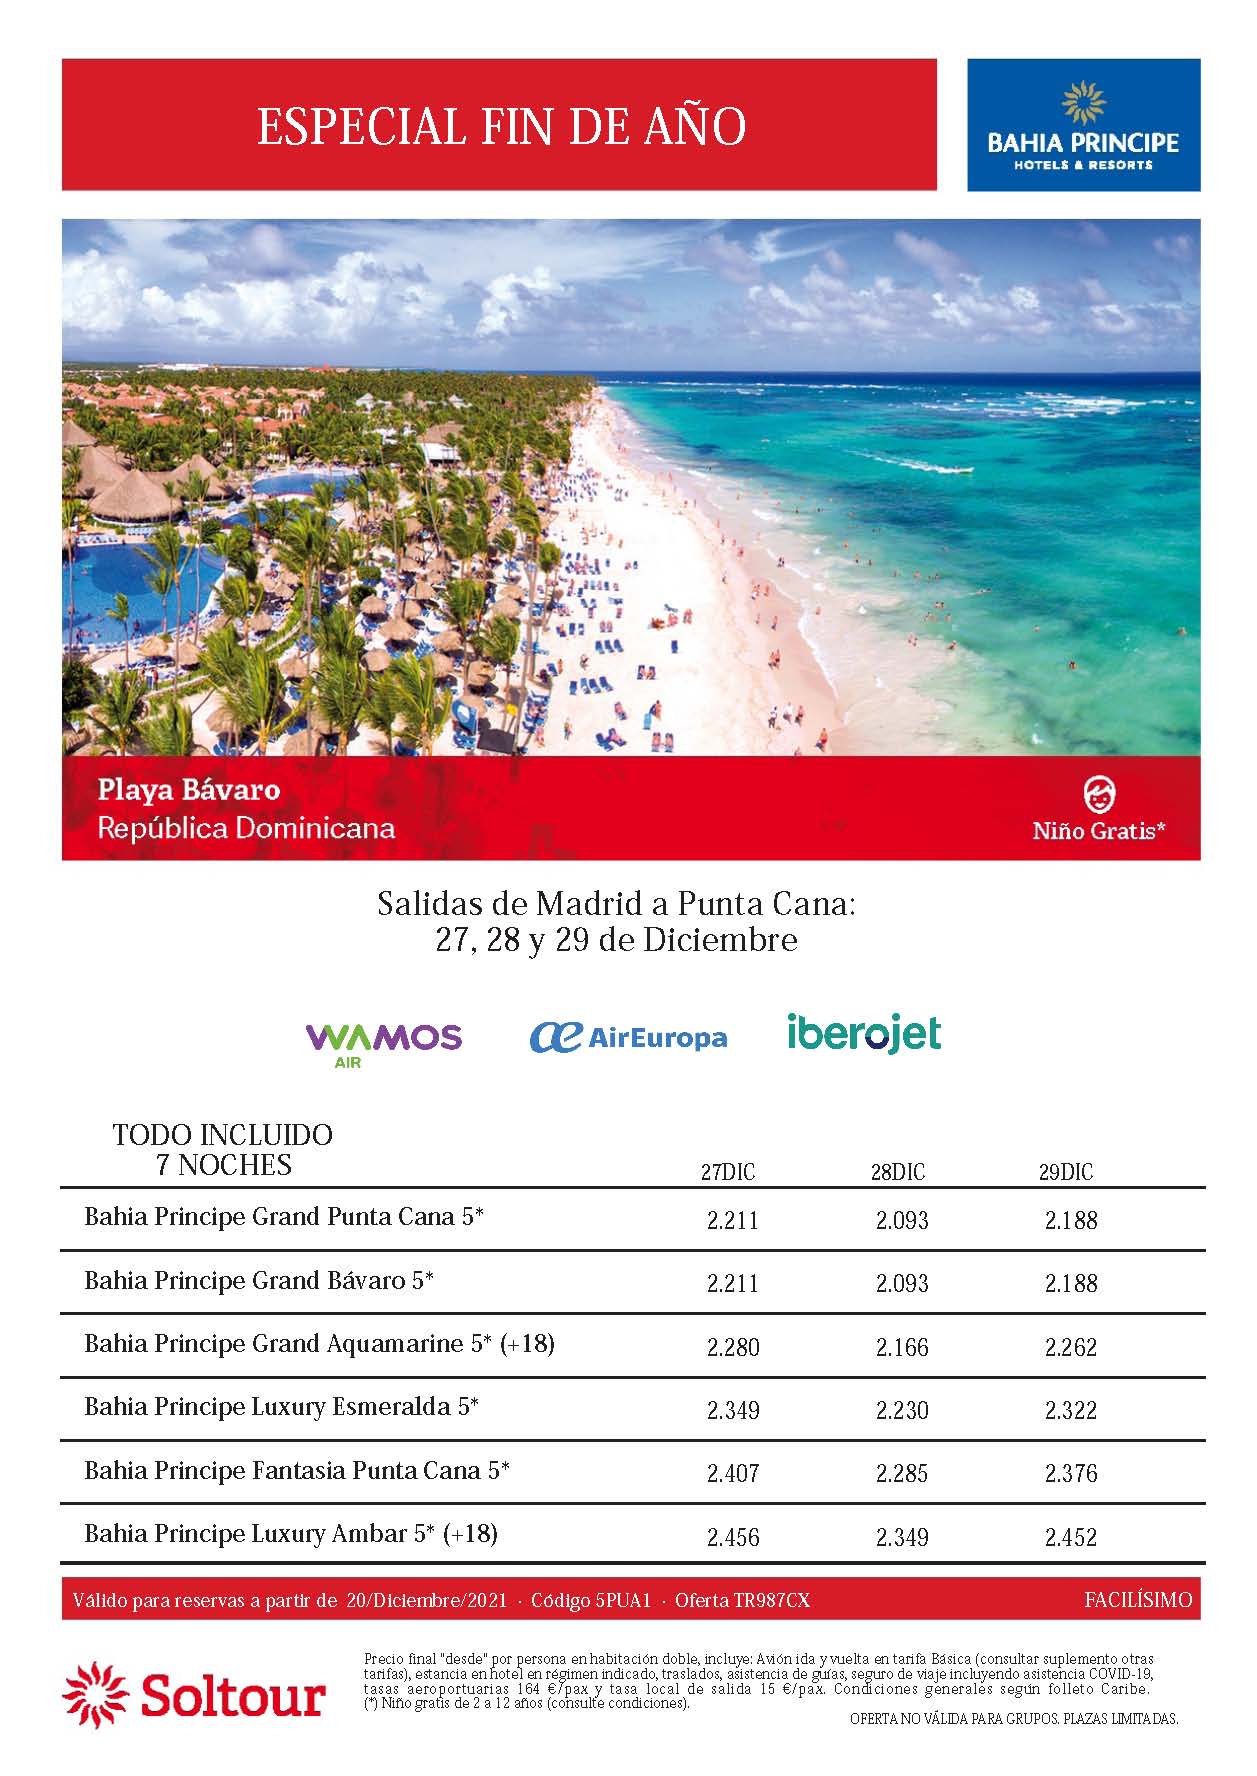 Ofertas Soltour Republica Dominicana Playa Bavaro hoteles Bahia Principe Fin de Año 2021 vuelo directo desde Madrid